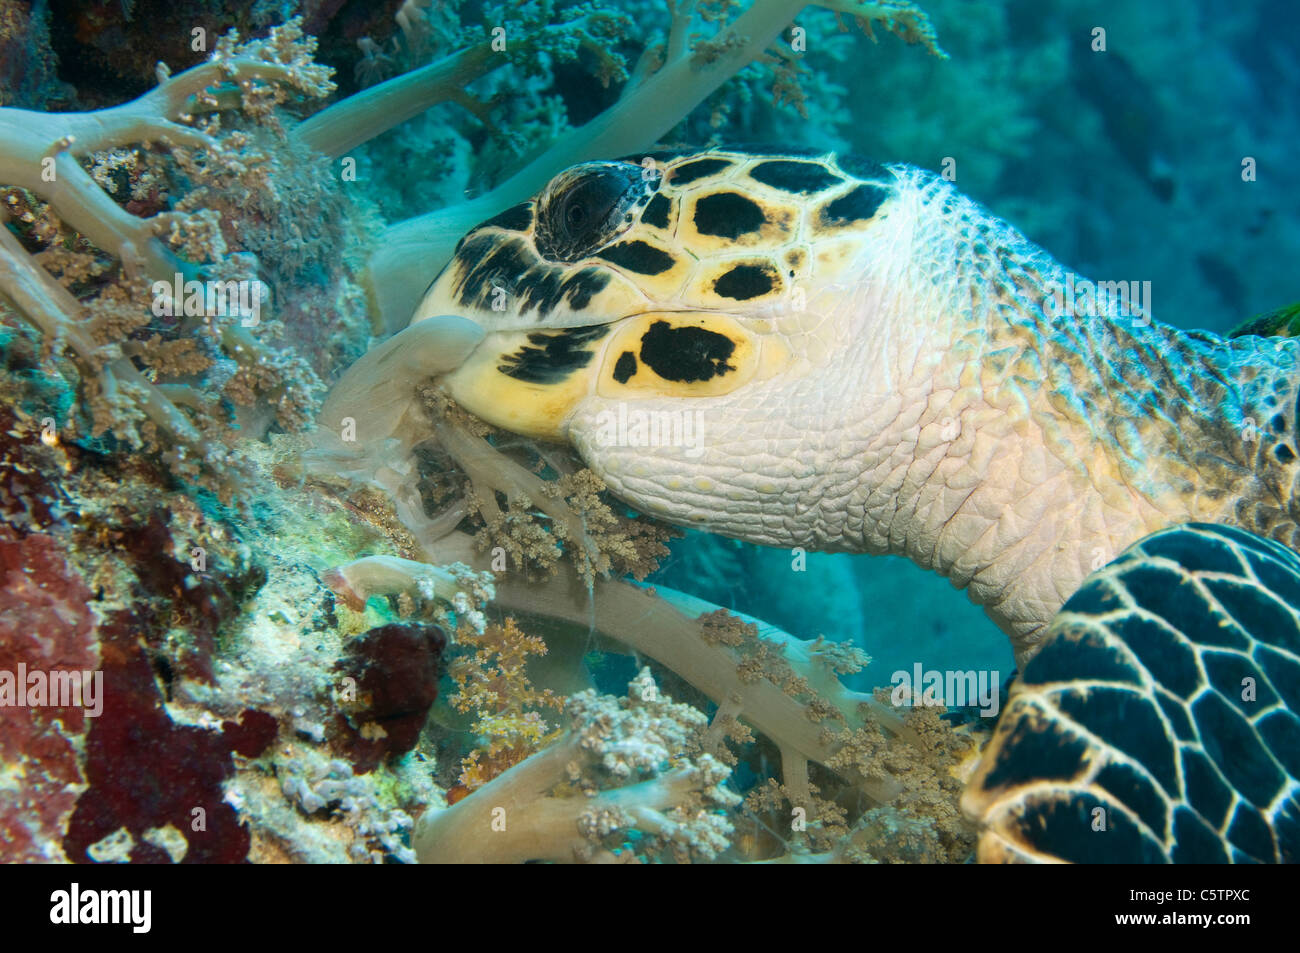 Egipto, el Mar Rojo, la tortuga carey (Eretmochelys imbricata) comer corales blandos, close-up Foto de stock